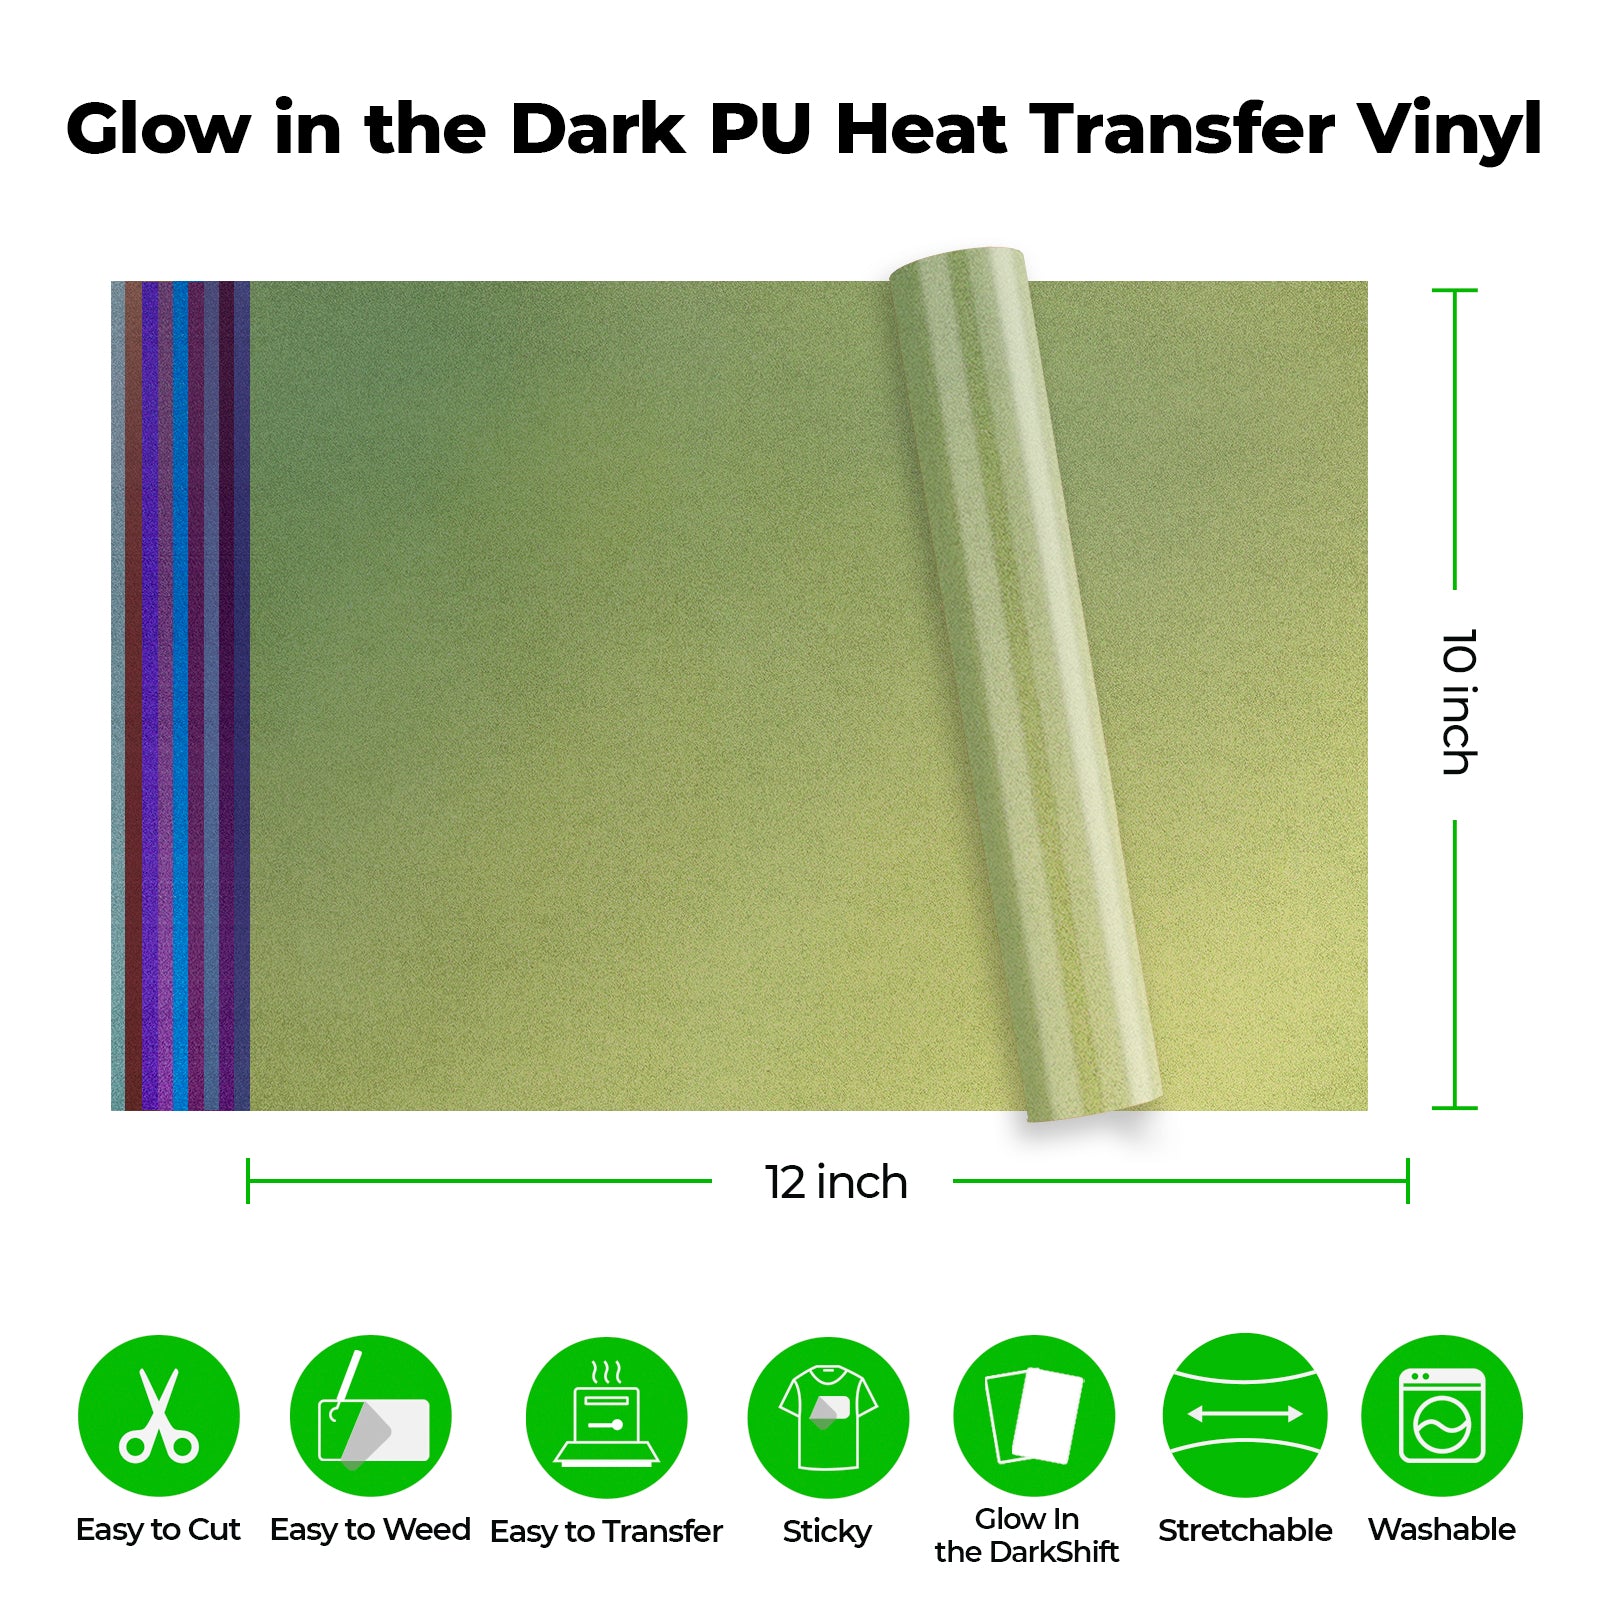 Chameleon PU Heat Transfer Vinyl (30pcs)